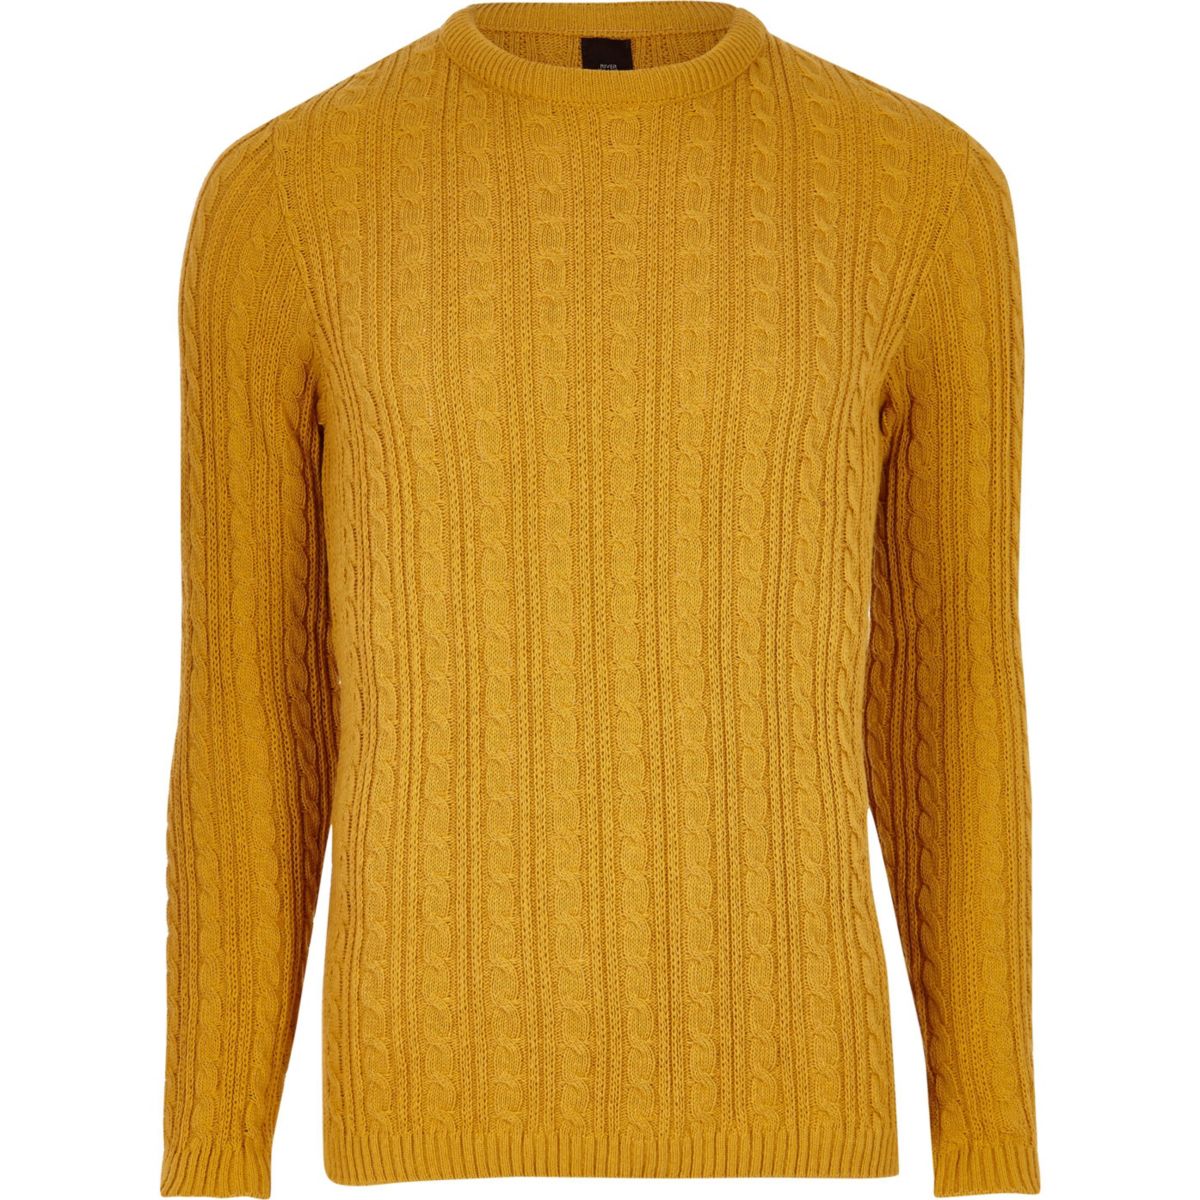 Mustard yellow long cardigan sweater men mini